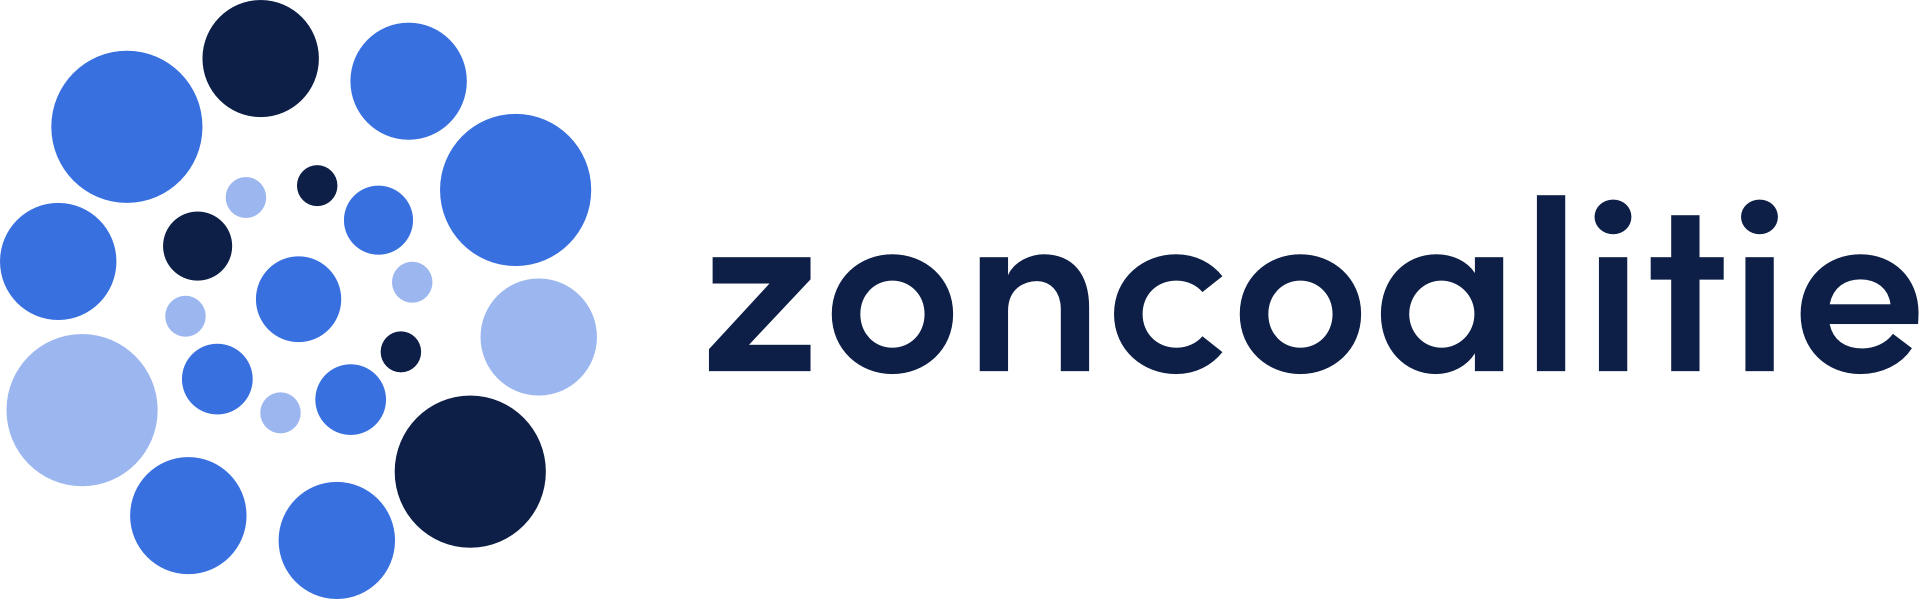 zoncoalitie logo